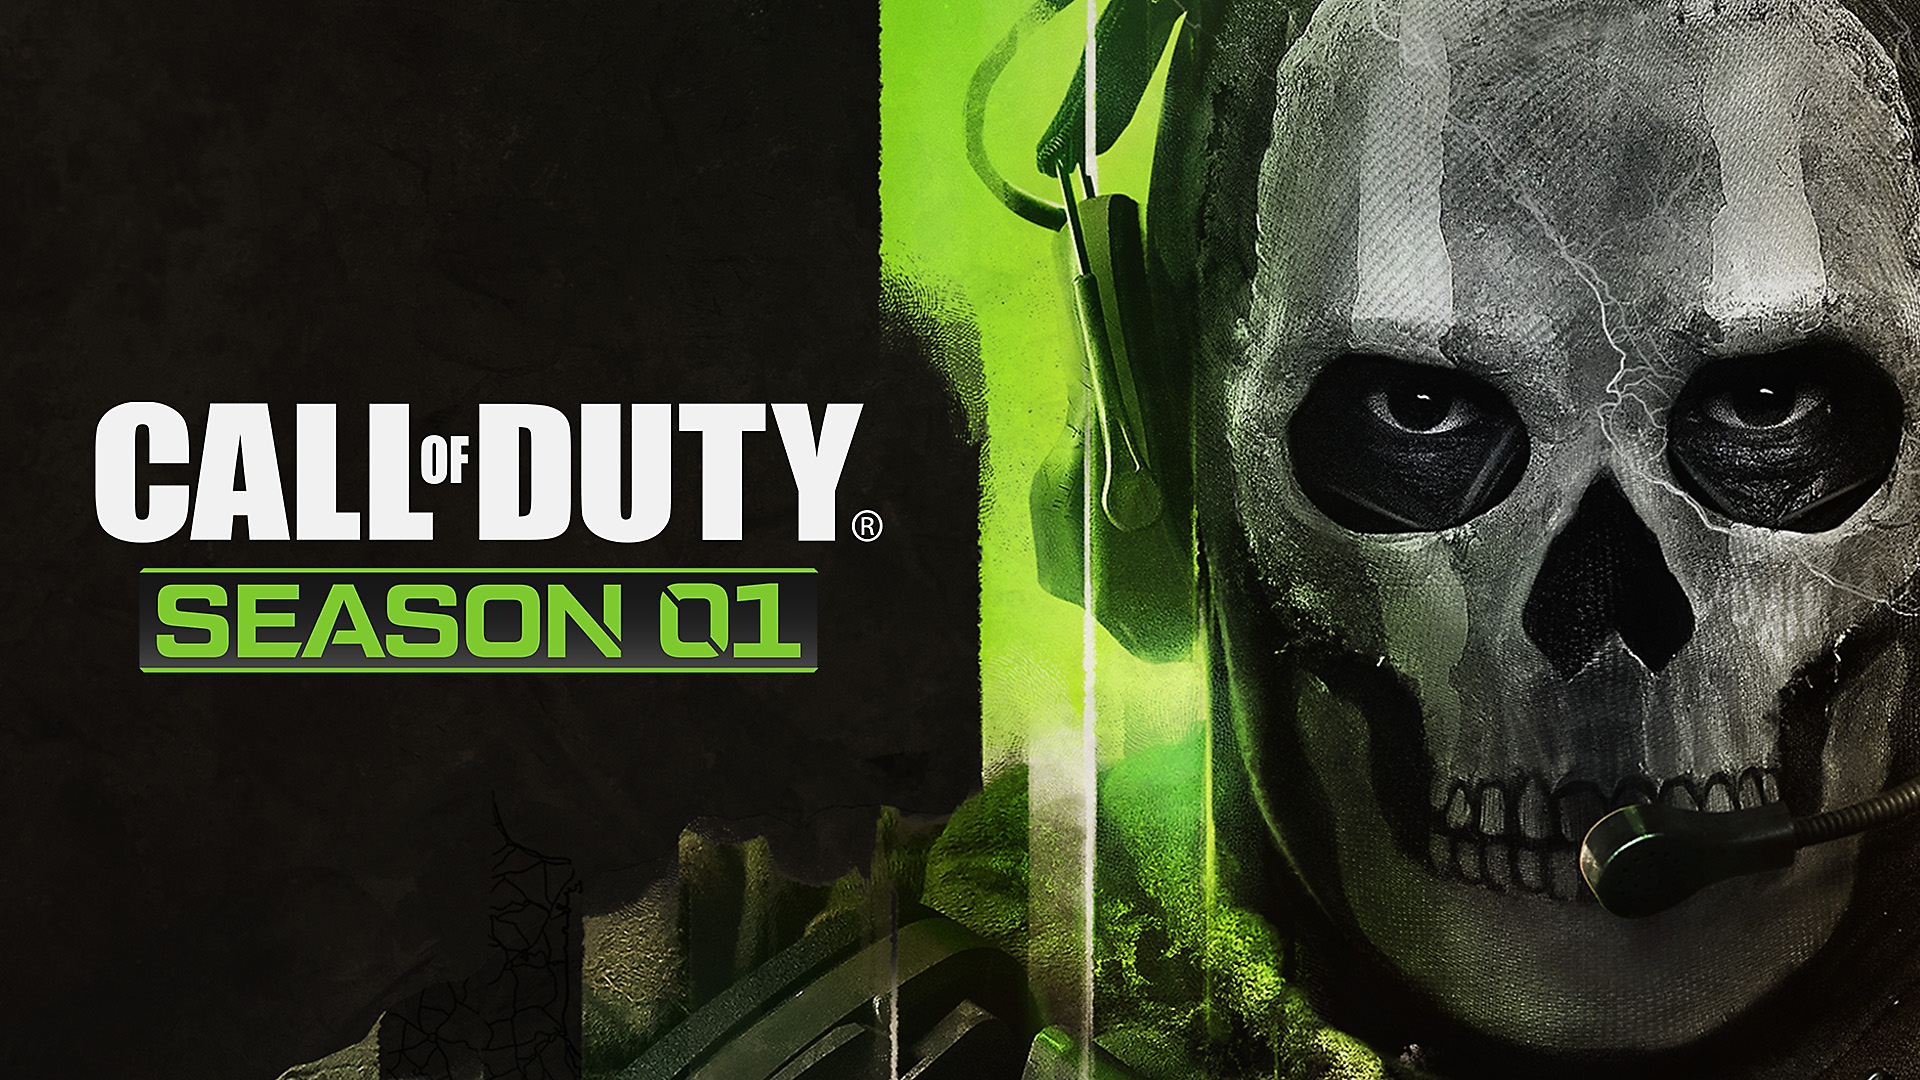 Seizoen 01-updatetrailer van Call of Duty Modern Warfare II